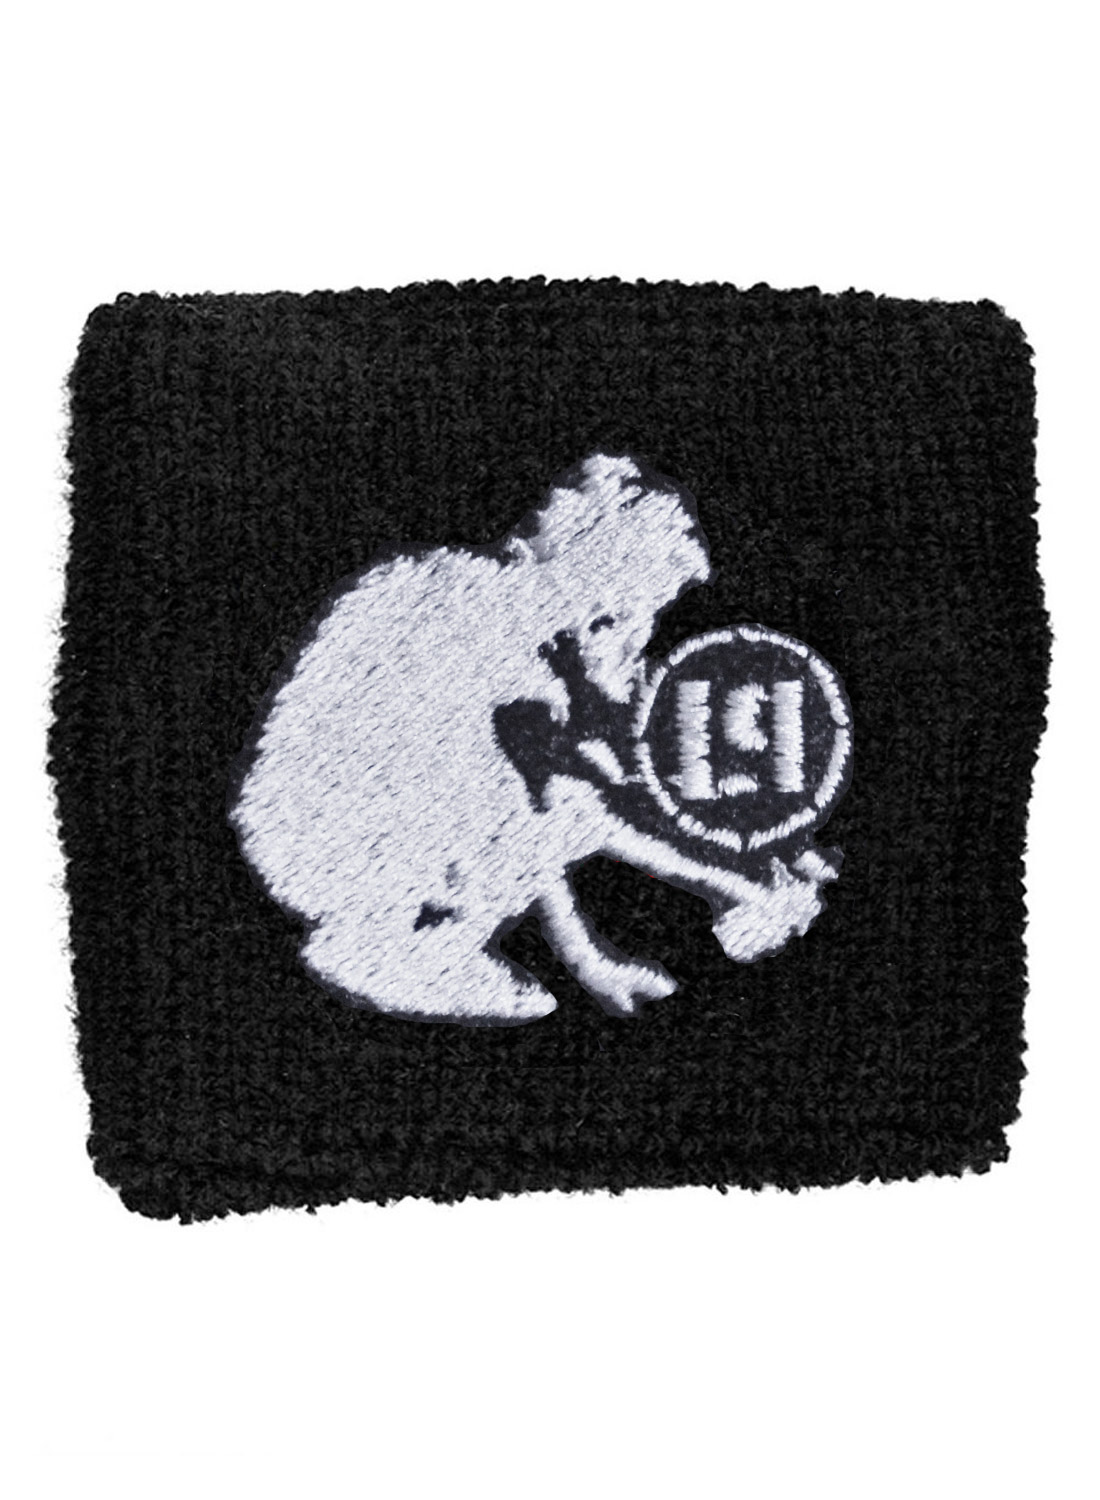 Linkin Park Embroidered Sweatband